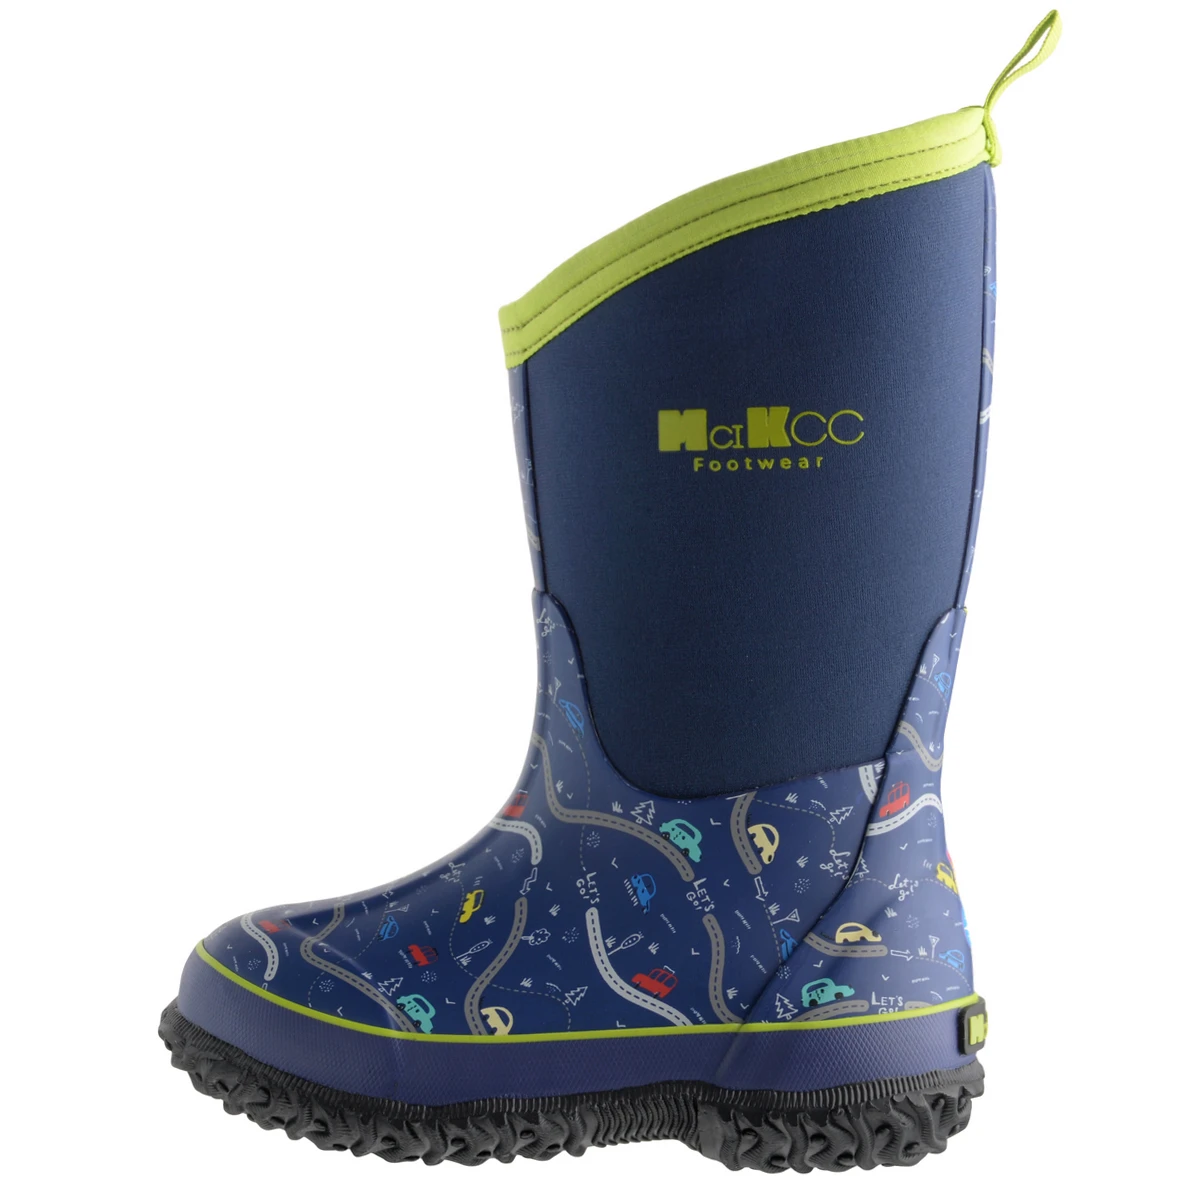 Wholesale Anti-Slippery Kids Rubber Rain Boots